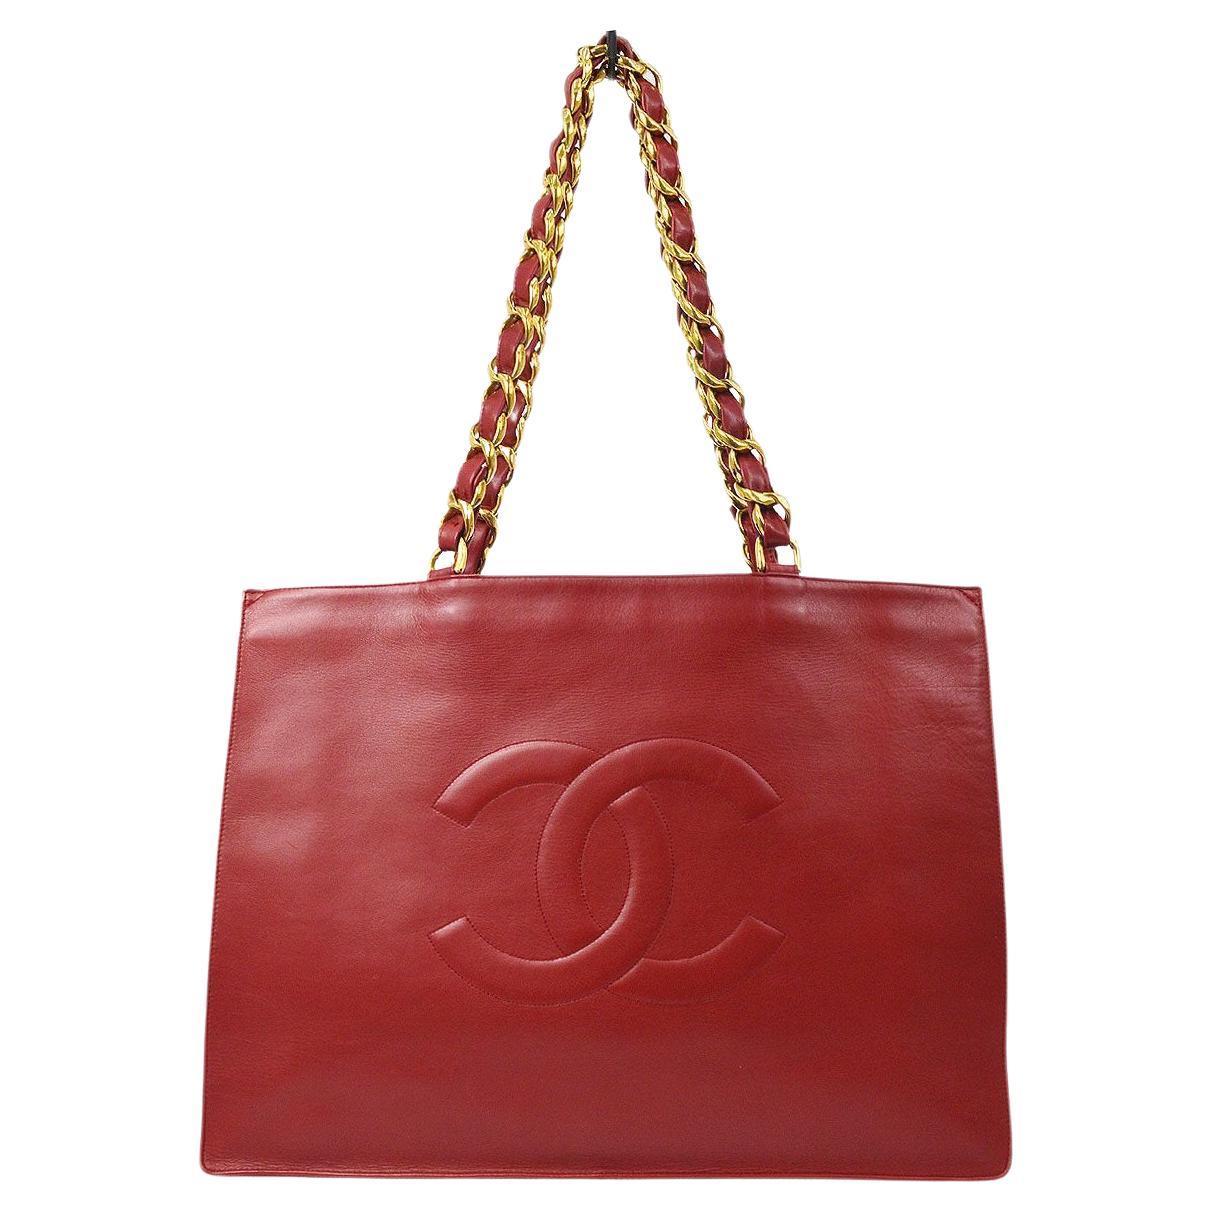 CHANEL CC Red Large Lambskin Leather Hardware Carryall Shopper Shoulder Tote Bag